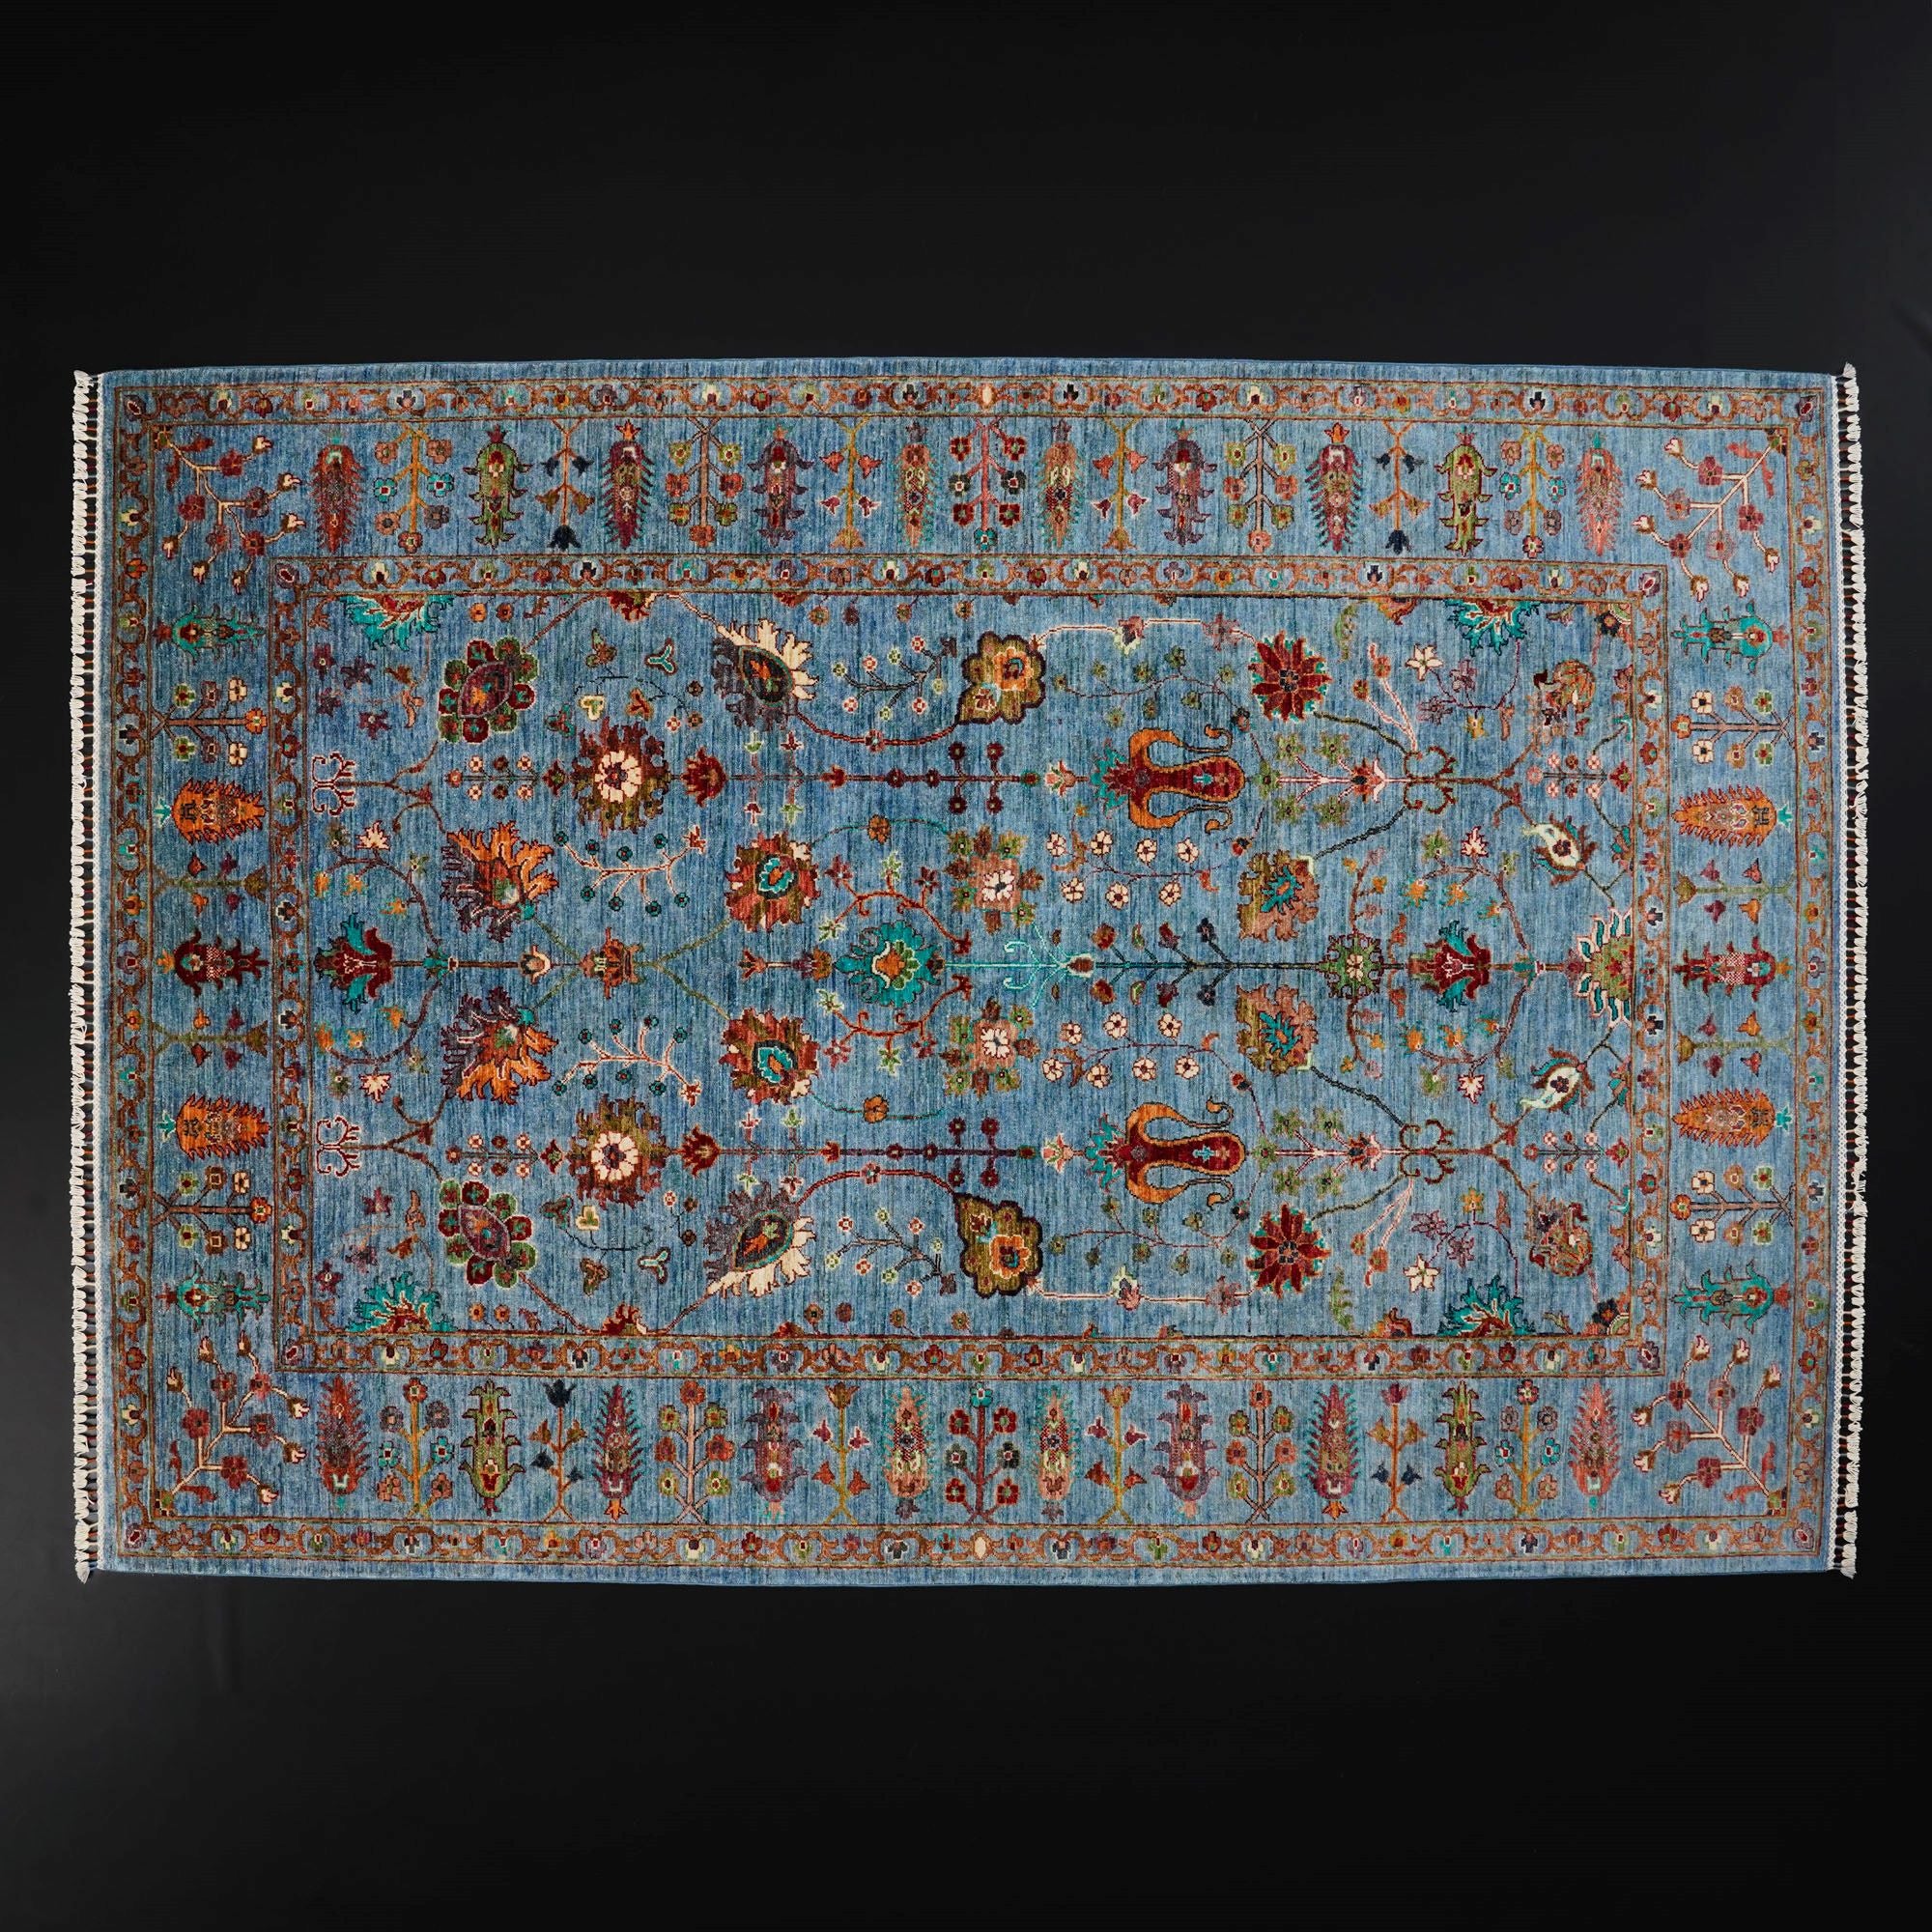 Şahzade Series Hand-Woven Uşak Patterned Colorful Wool Carpet